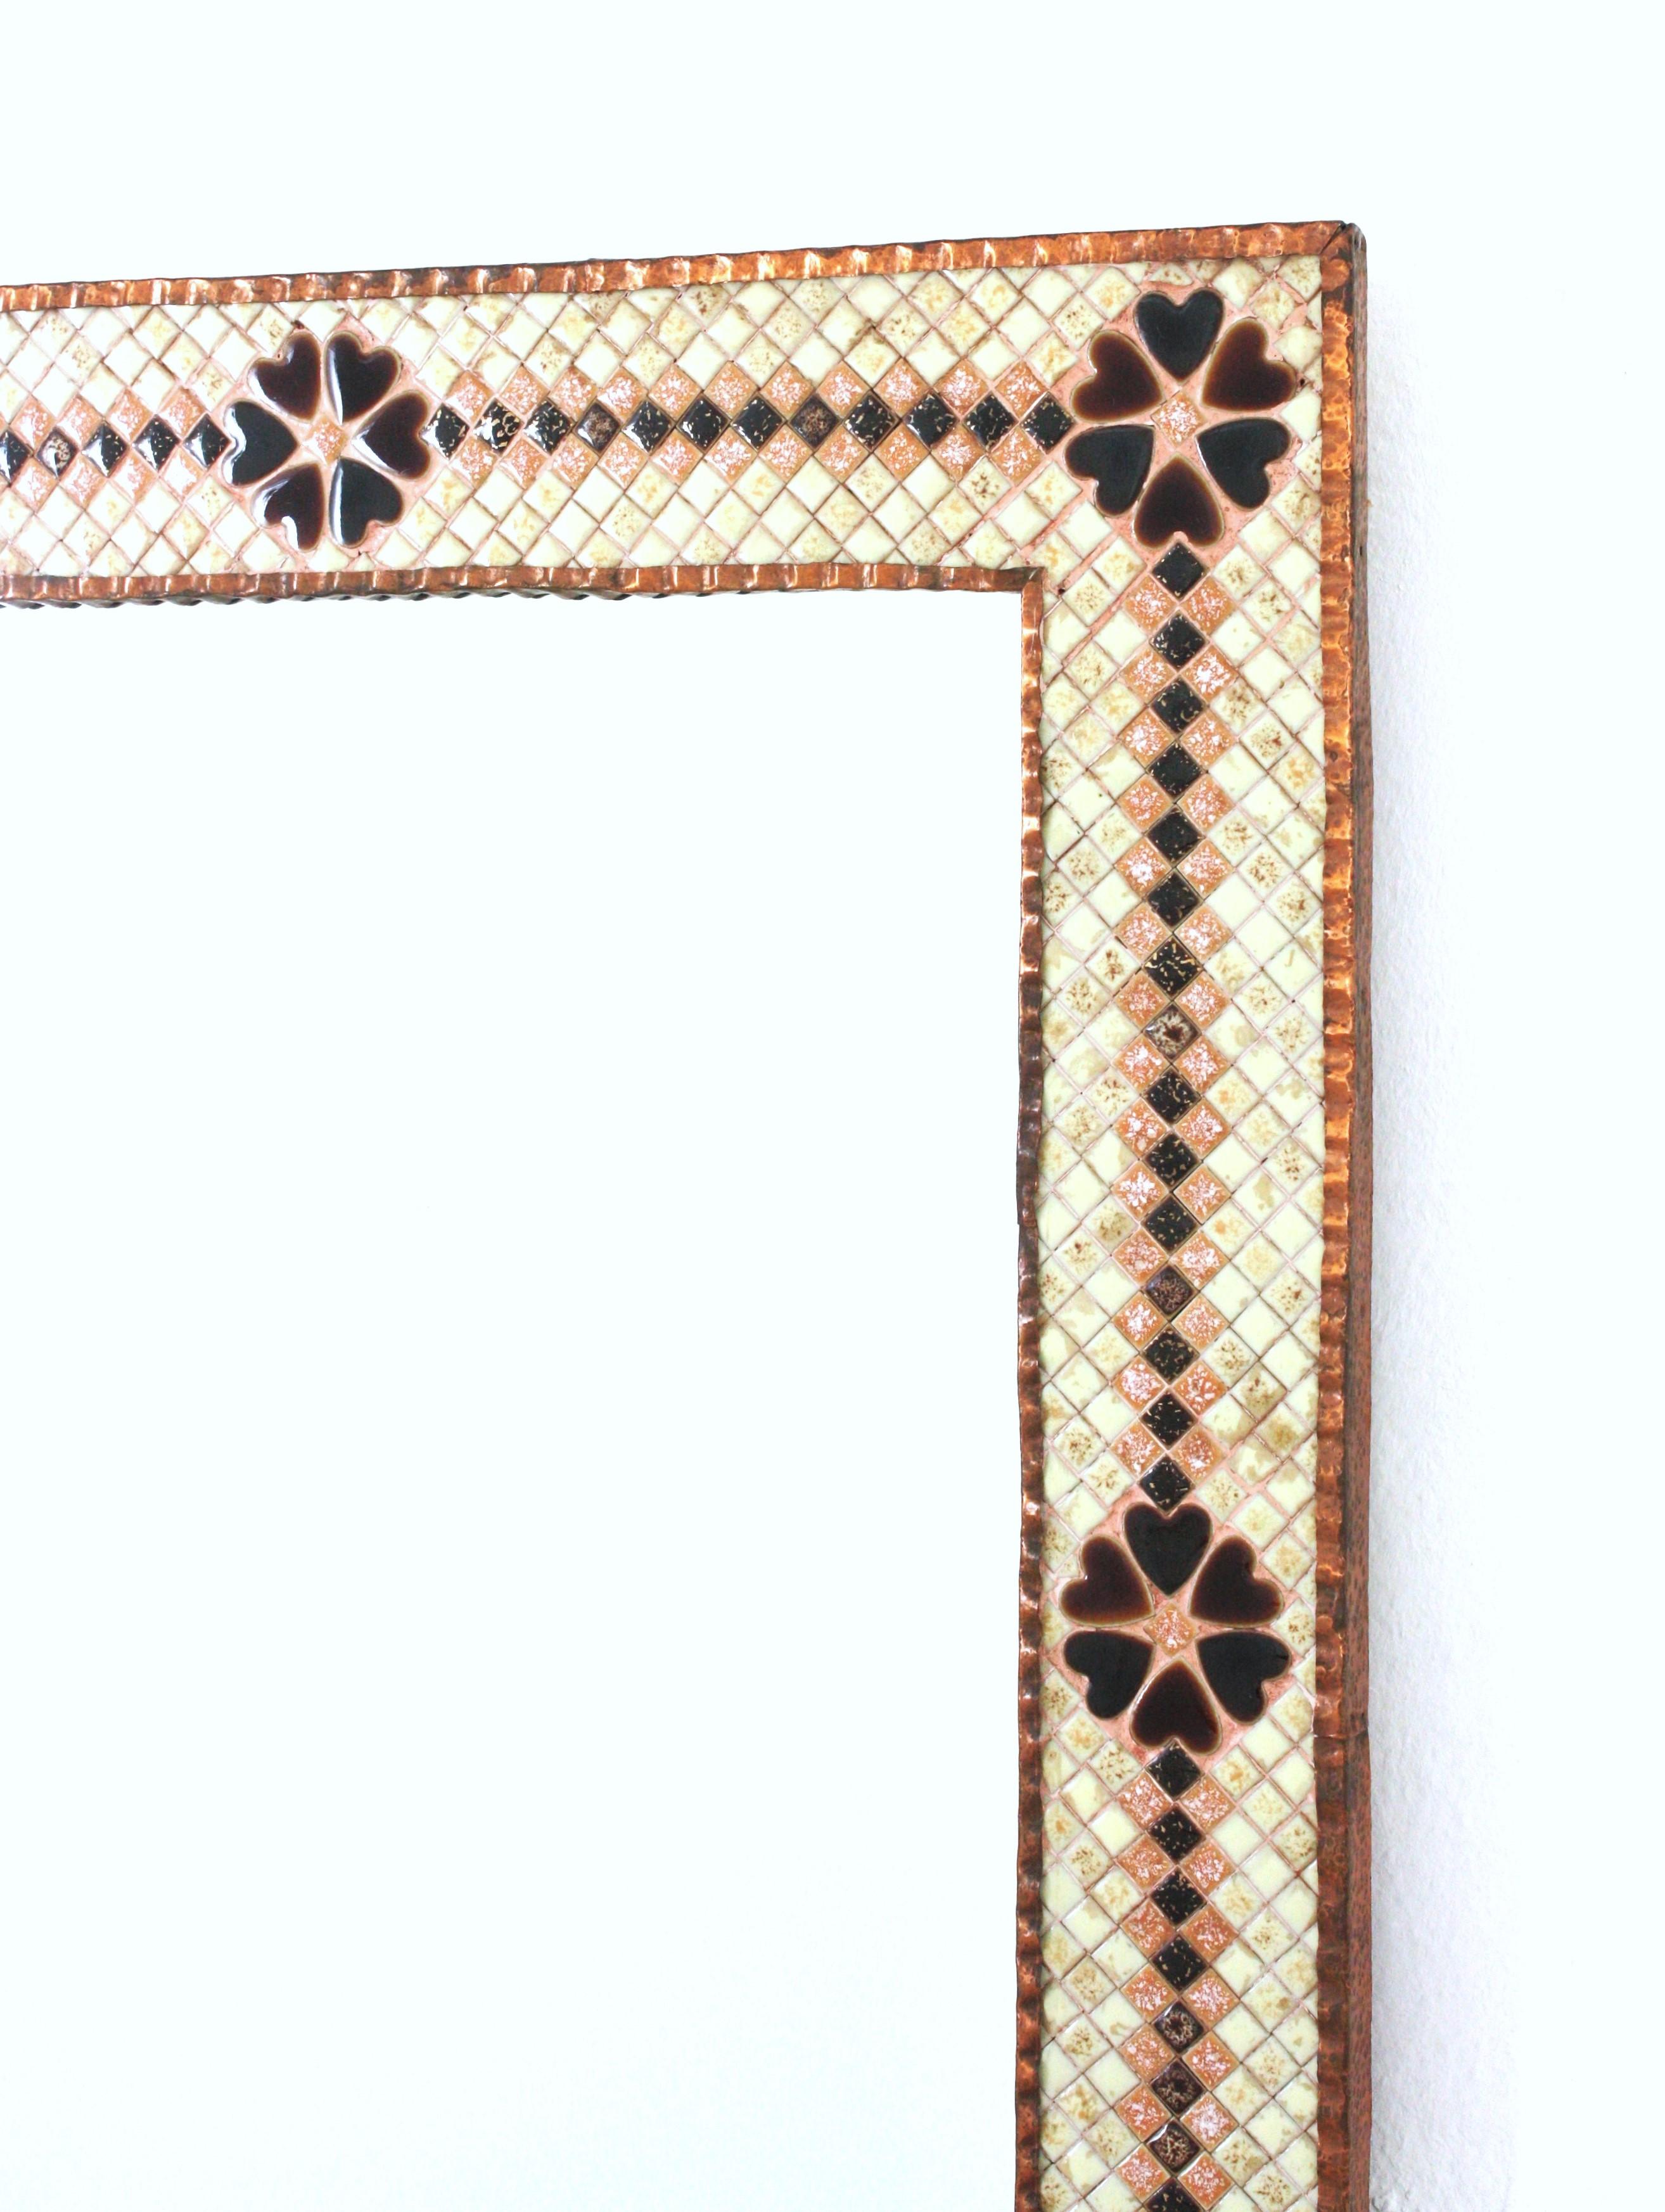 Spanish Mosaic Rectangular Mirror in Glazed Ceramic, 1950s For Sale 3